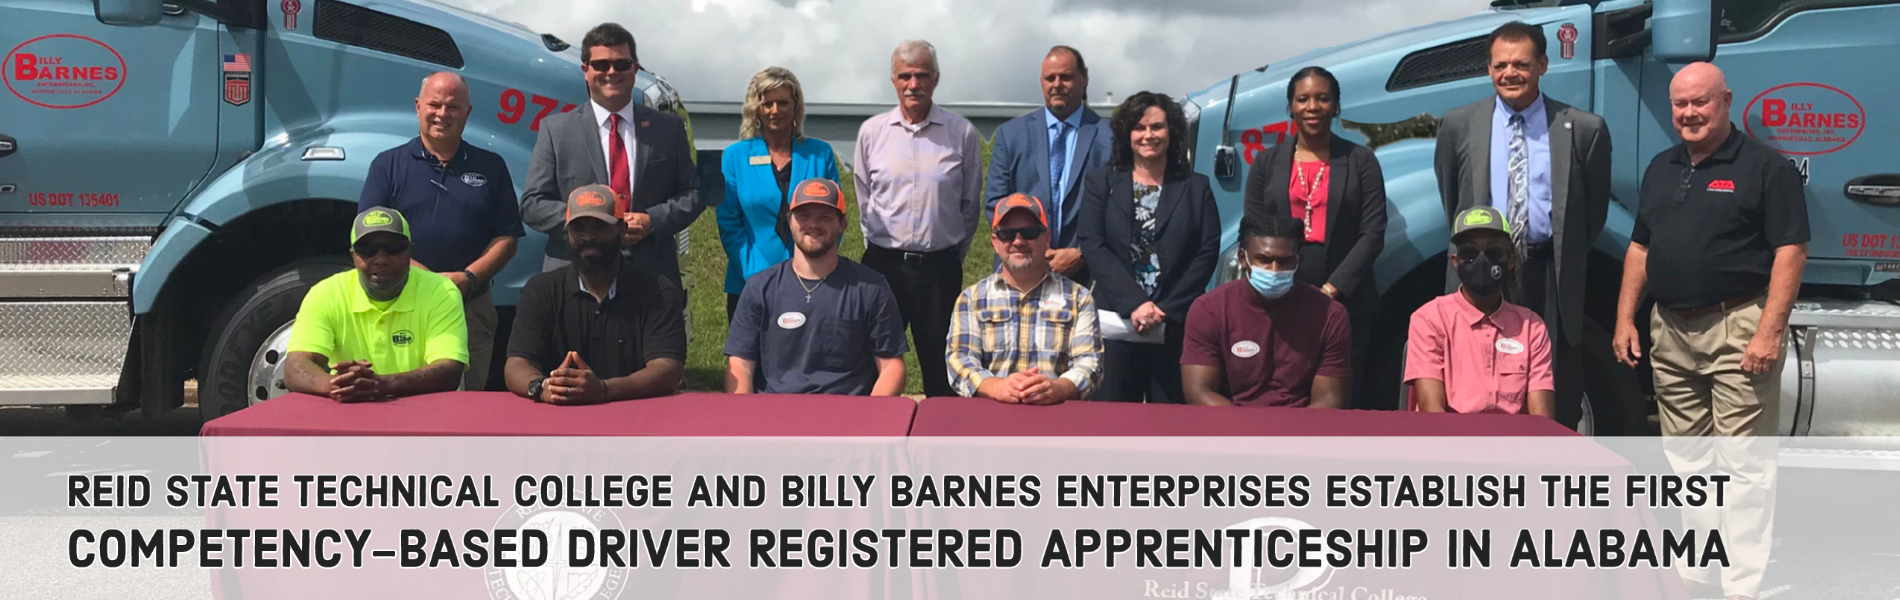 Billy Barnes Apprenticeship